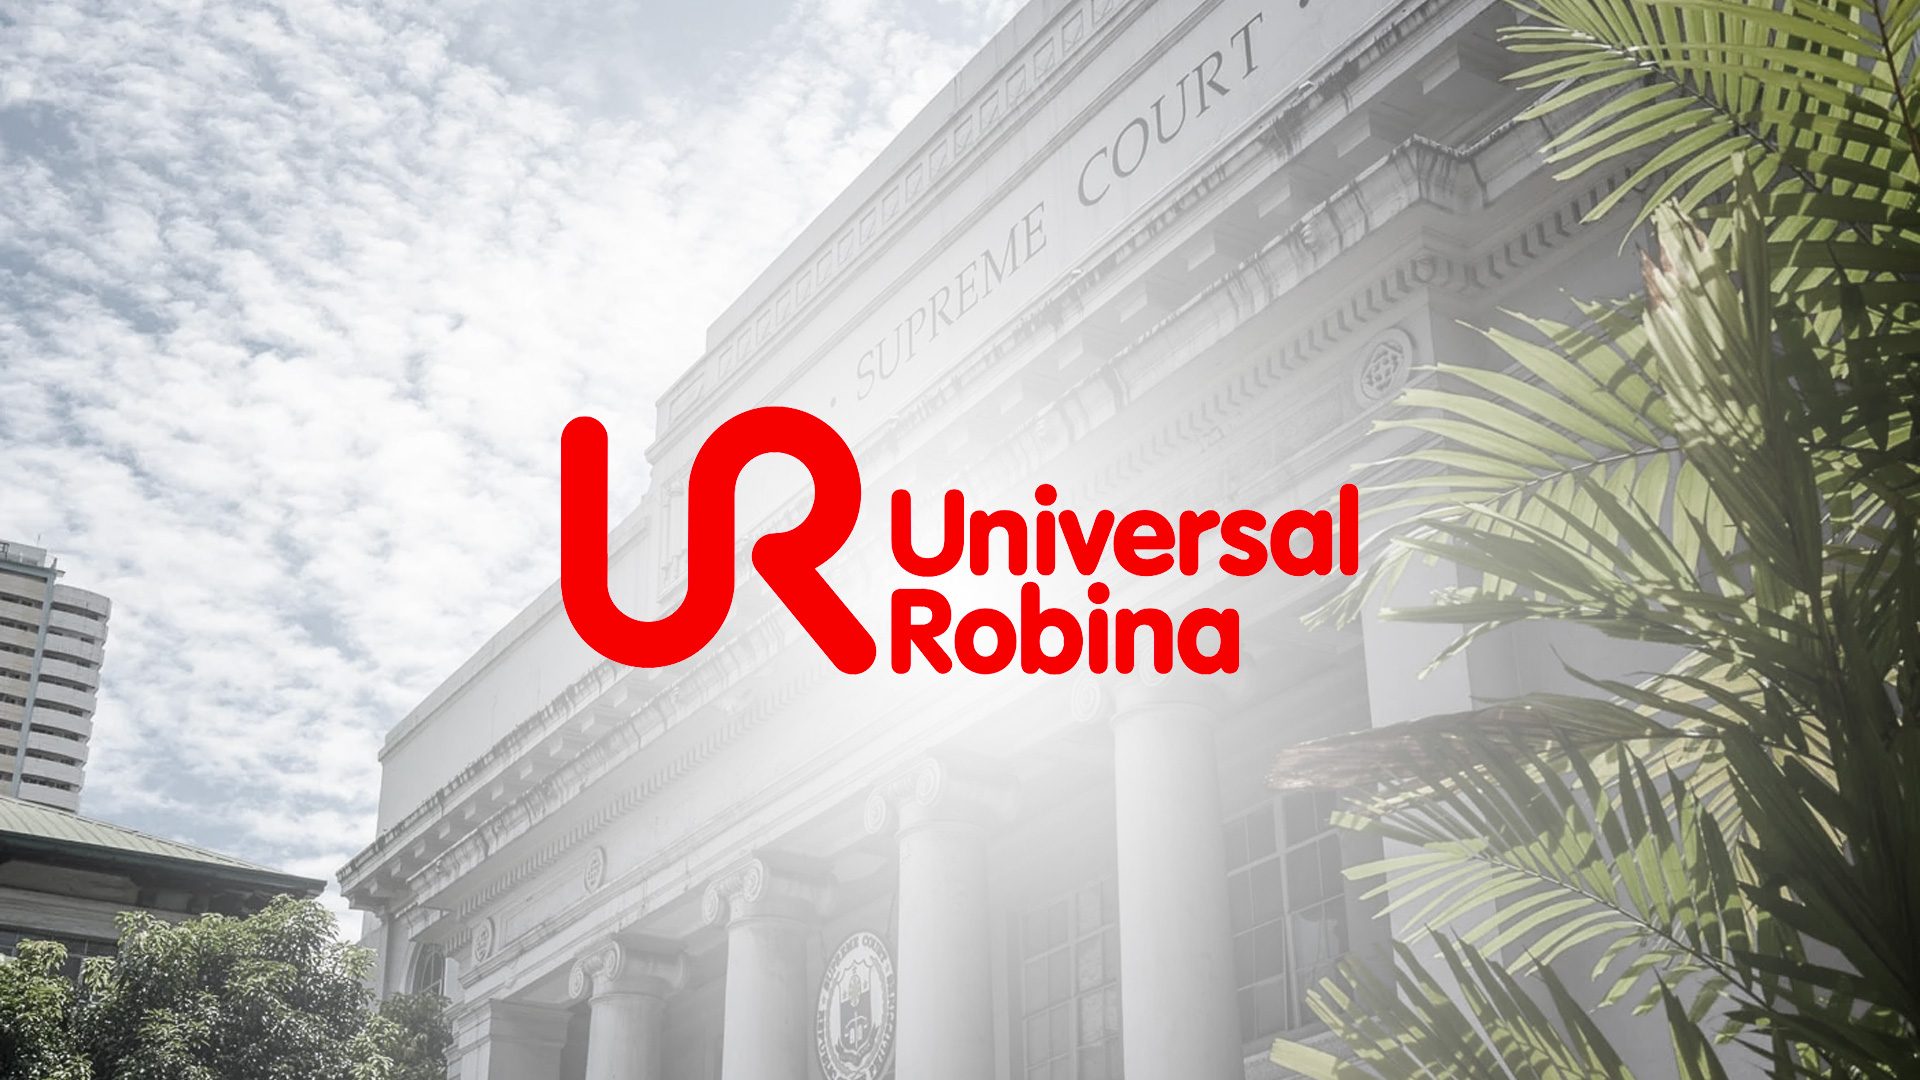 SC denies Universal Robina’s petition challenging provision on profiteering